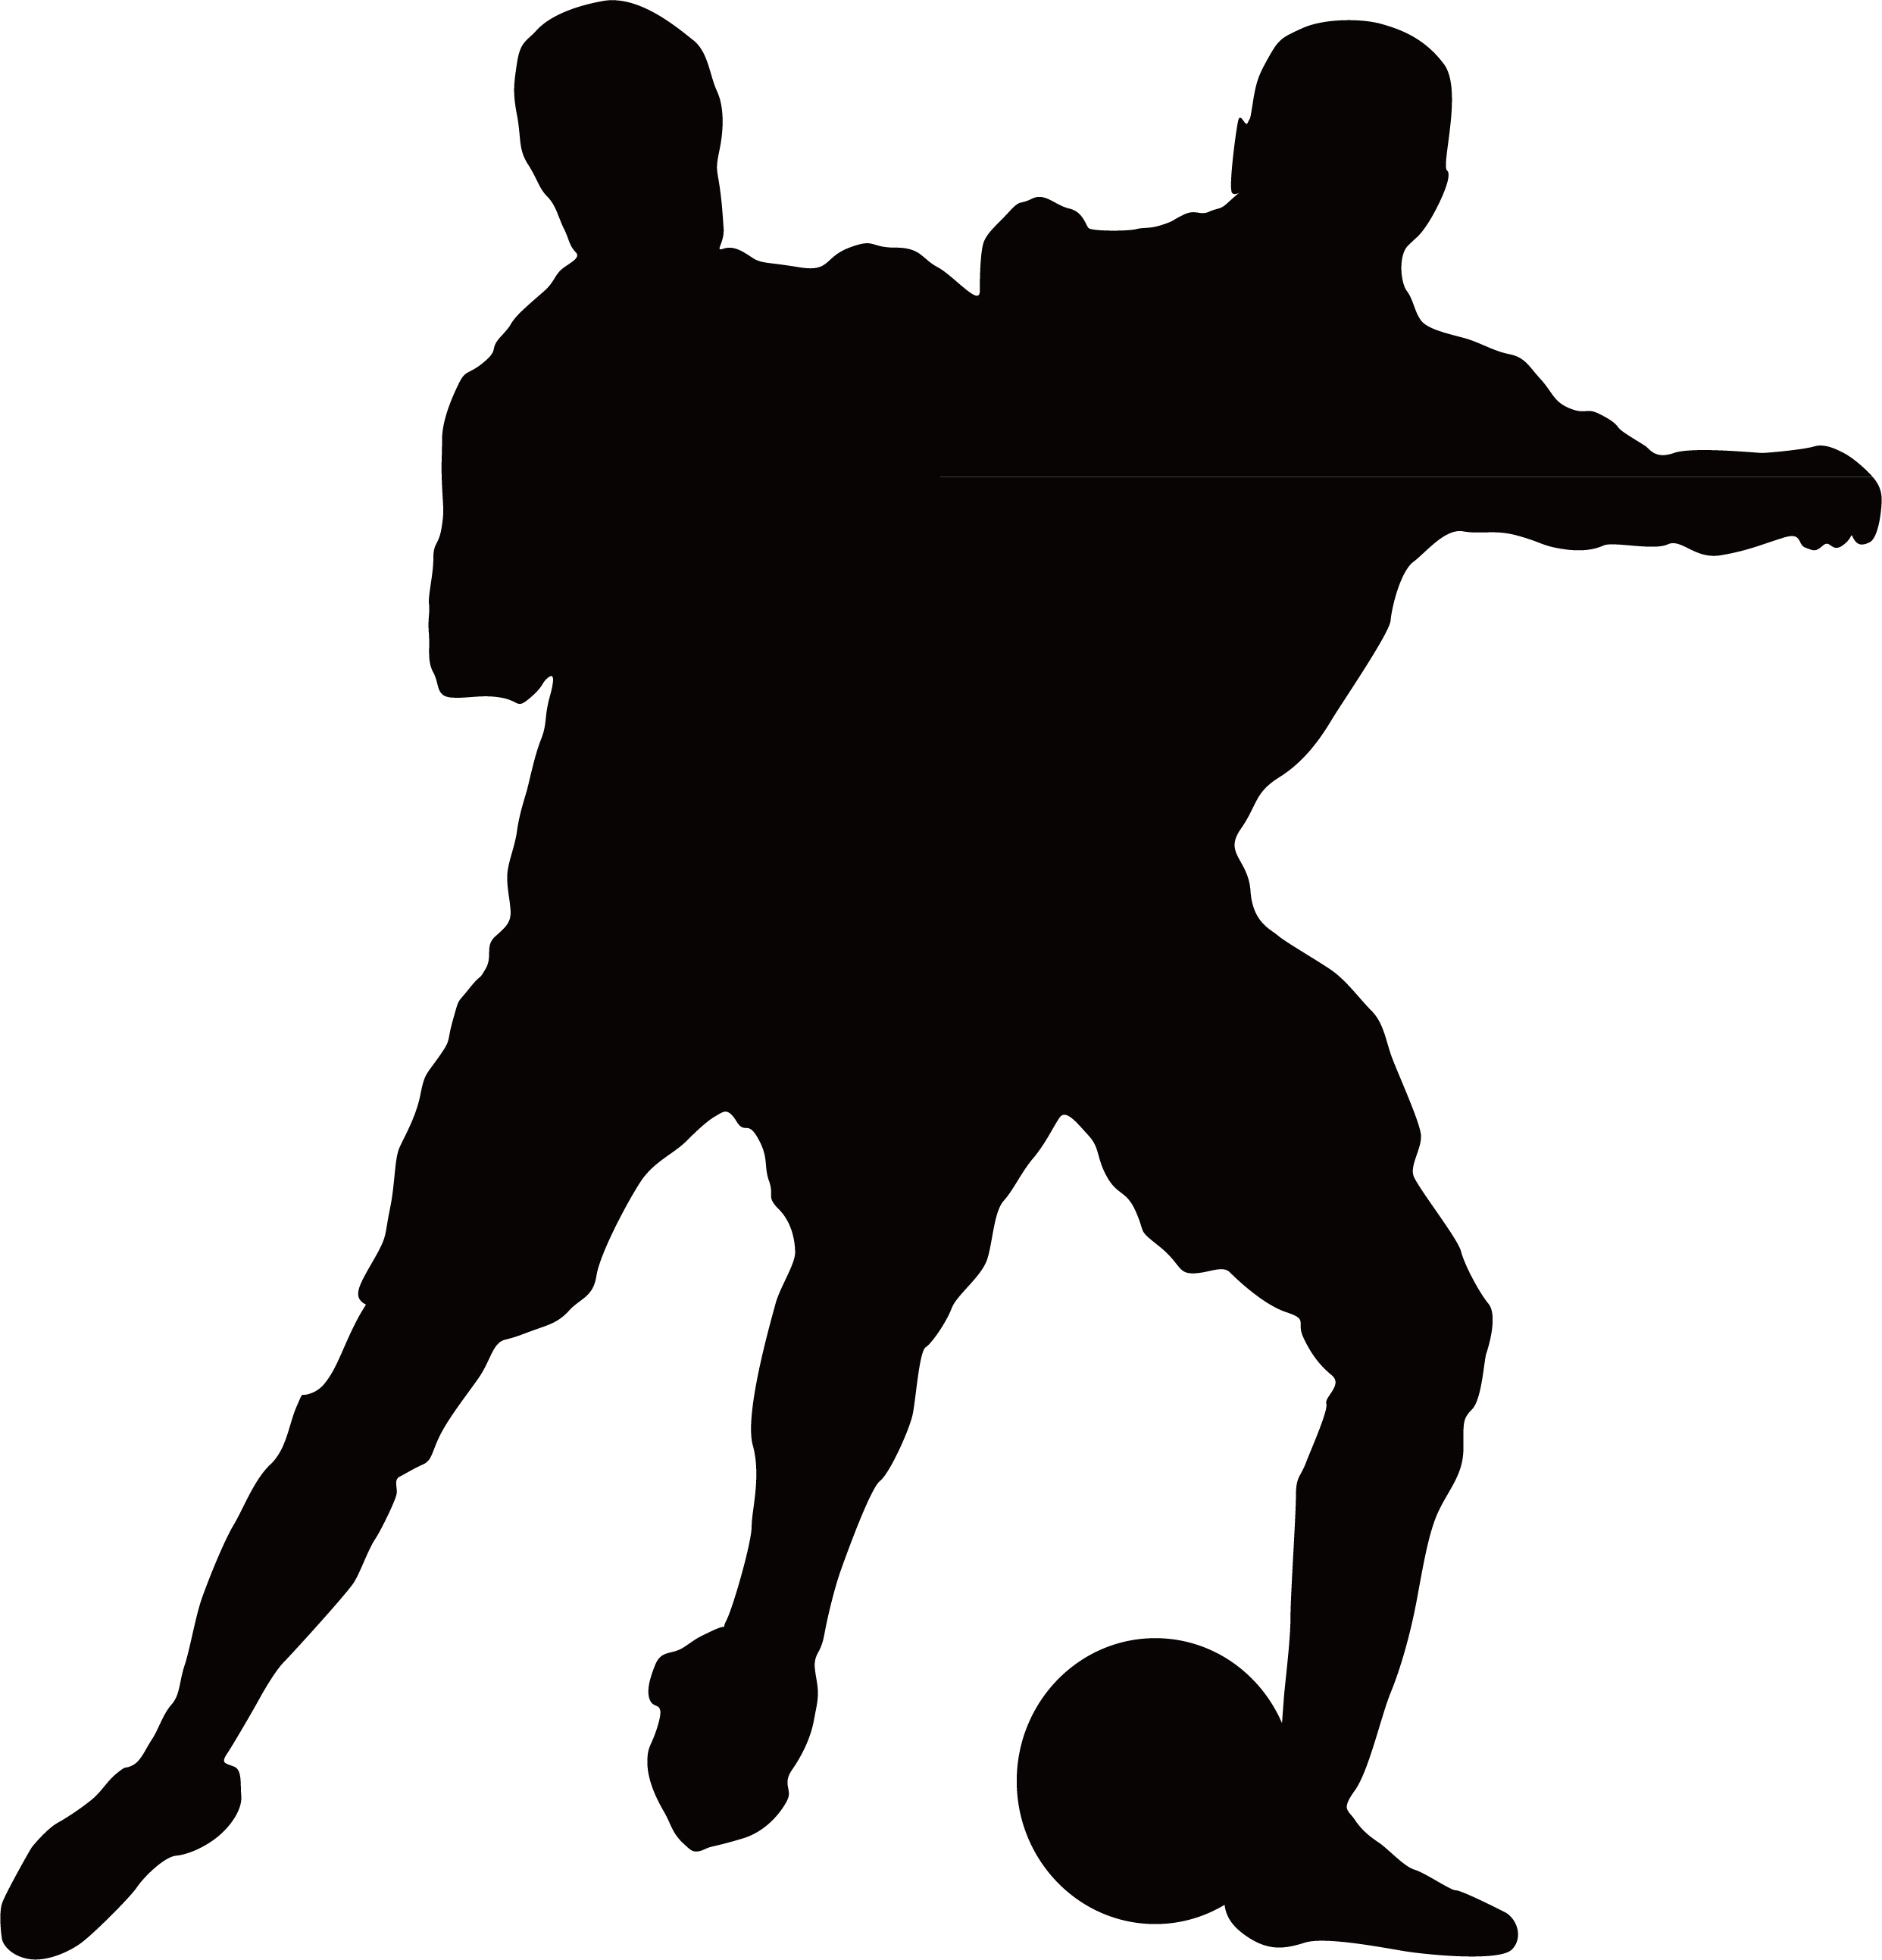 Football Player Illustration - Football Player (2484x2587)